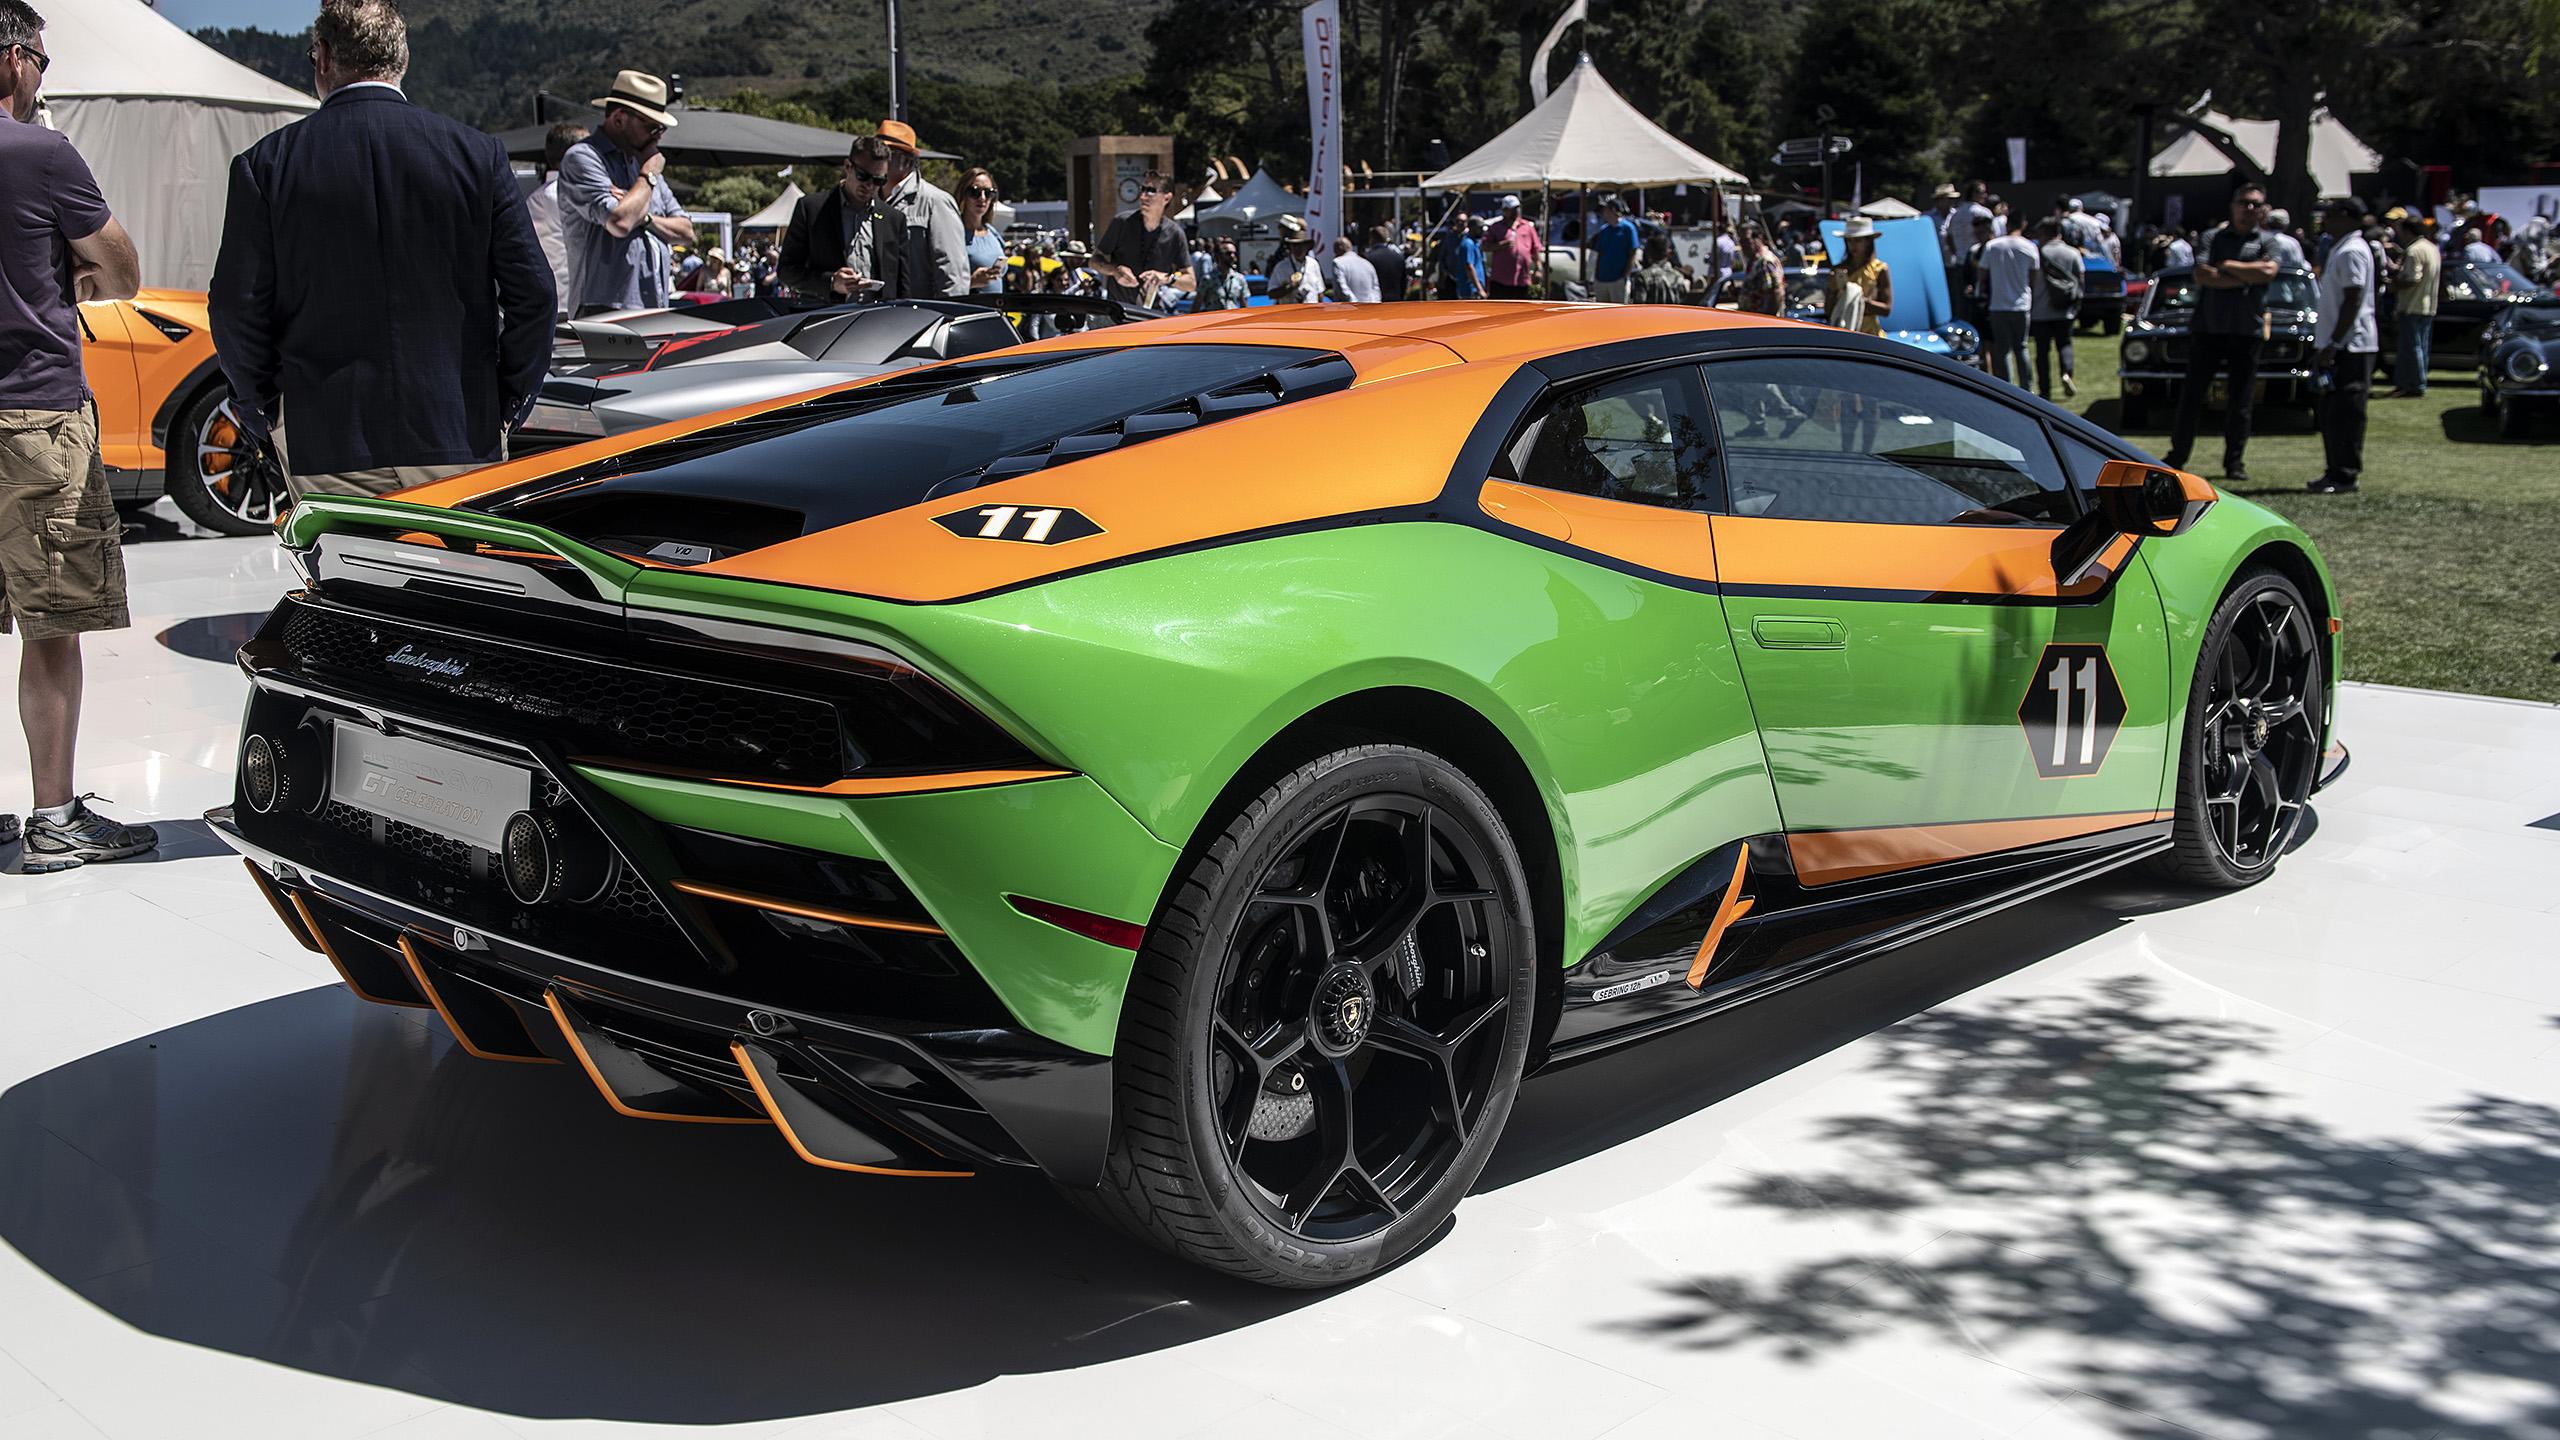 Lamborghini Huracan Evo GT Celebration at the Quail Photo Gallery